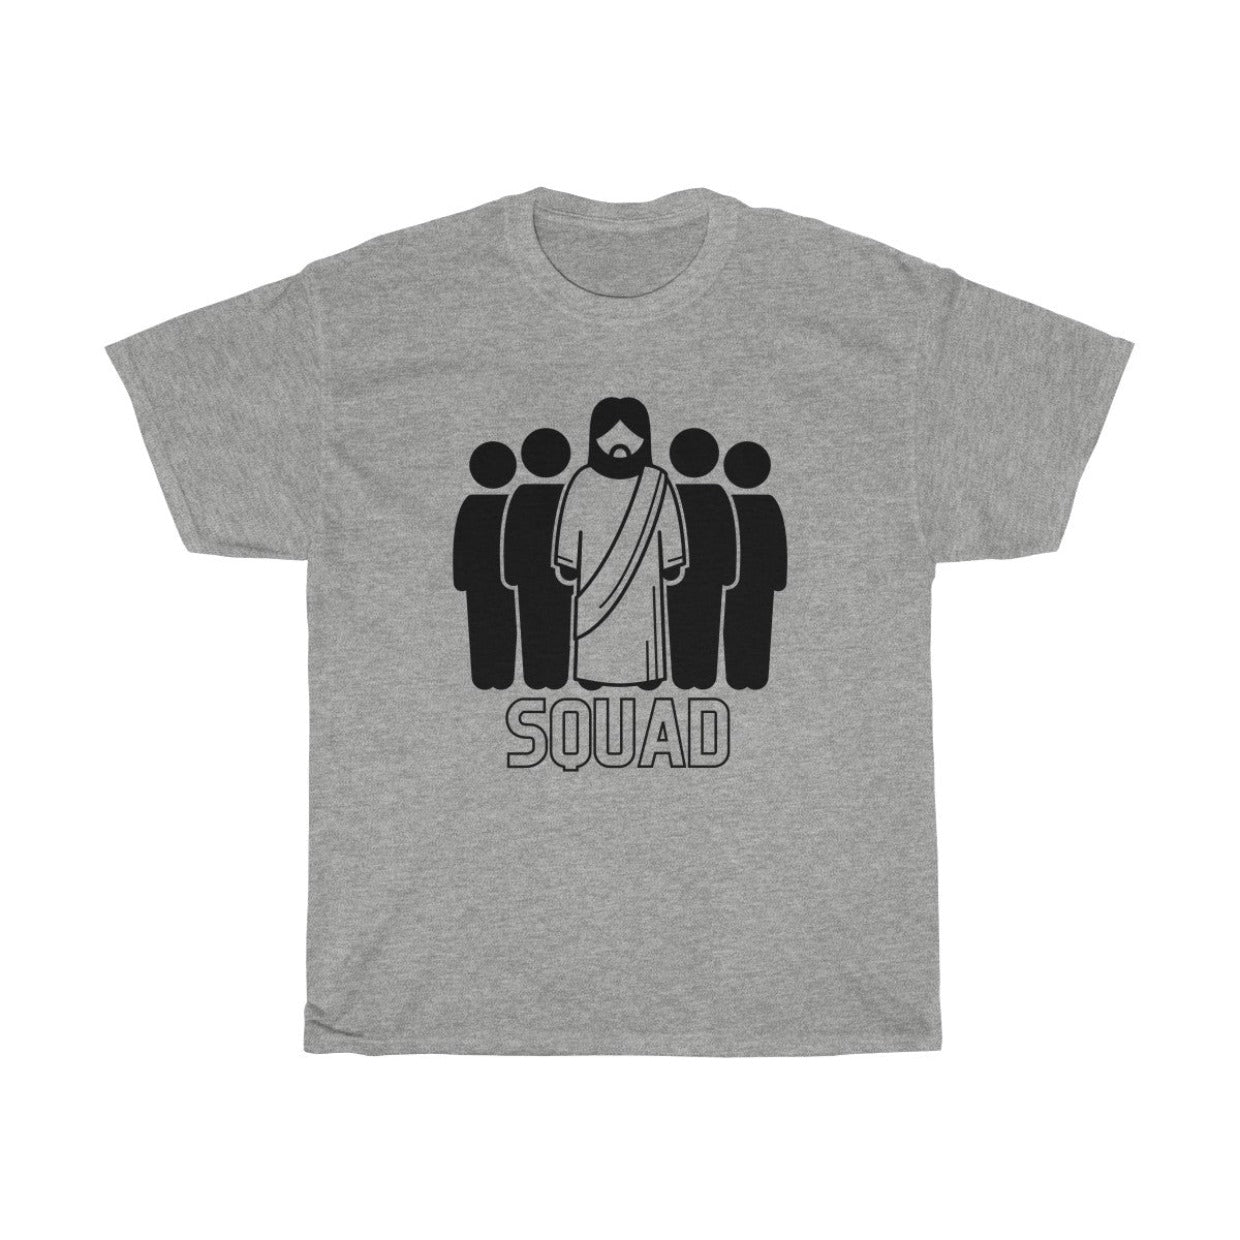 Squad - Adult Christian Shirt | LifeSpring Shirts - LifeSpring Shirts